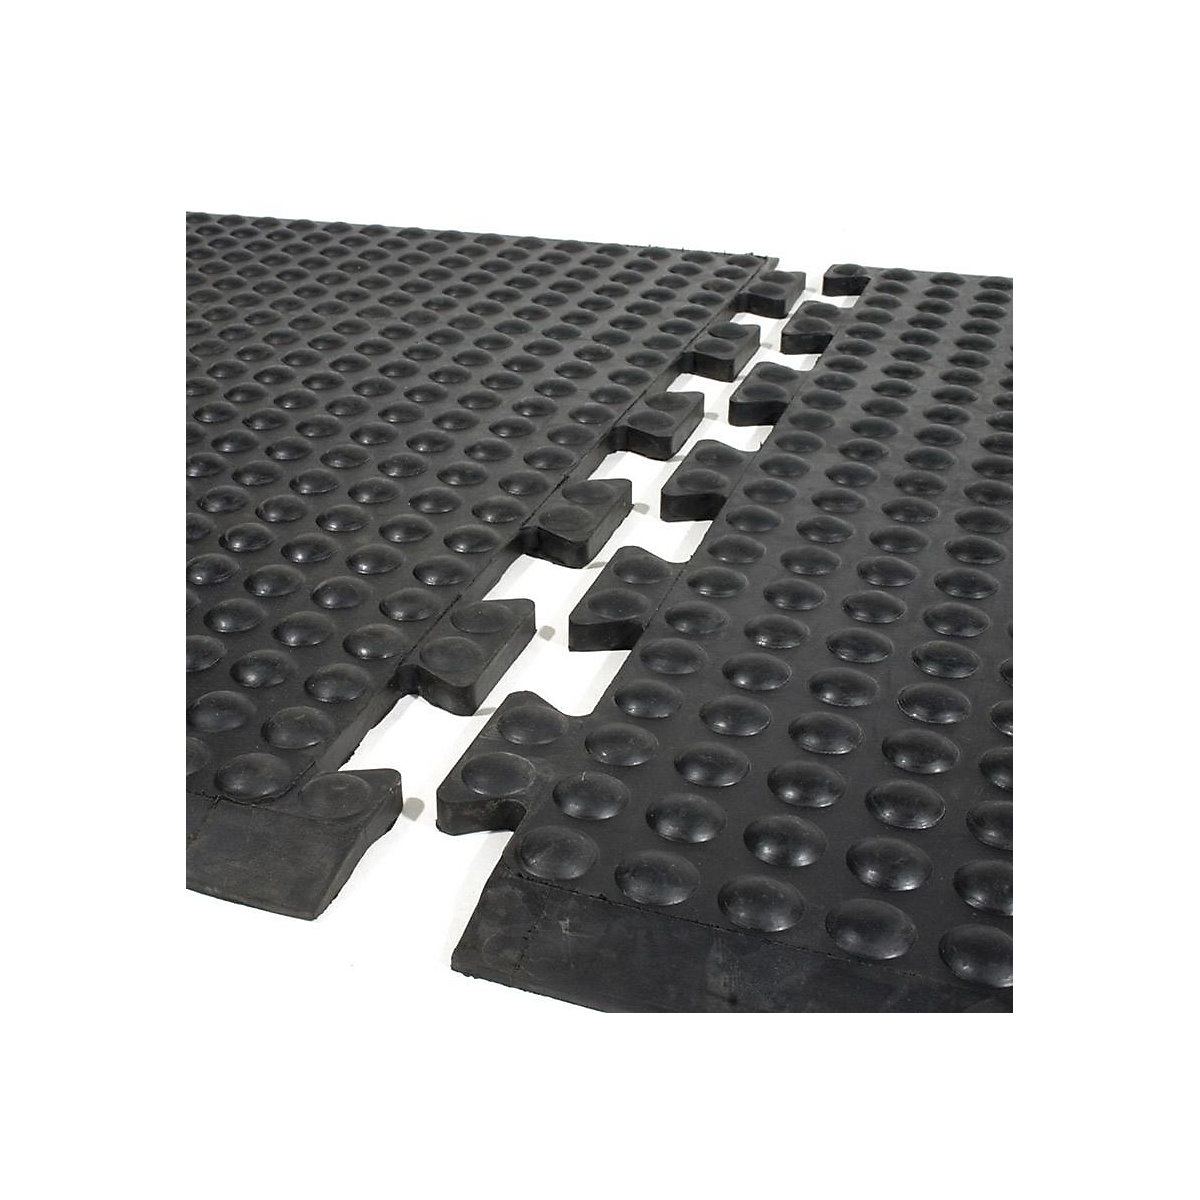 Bubblemat anti-fatigue matting, centre piece, LxW 900 x 600 mm